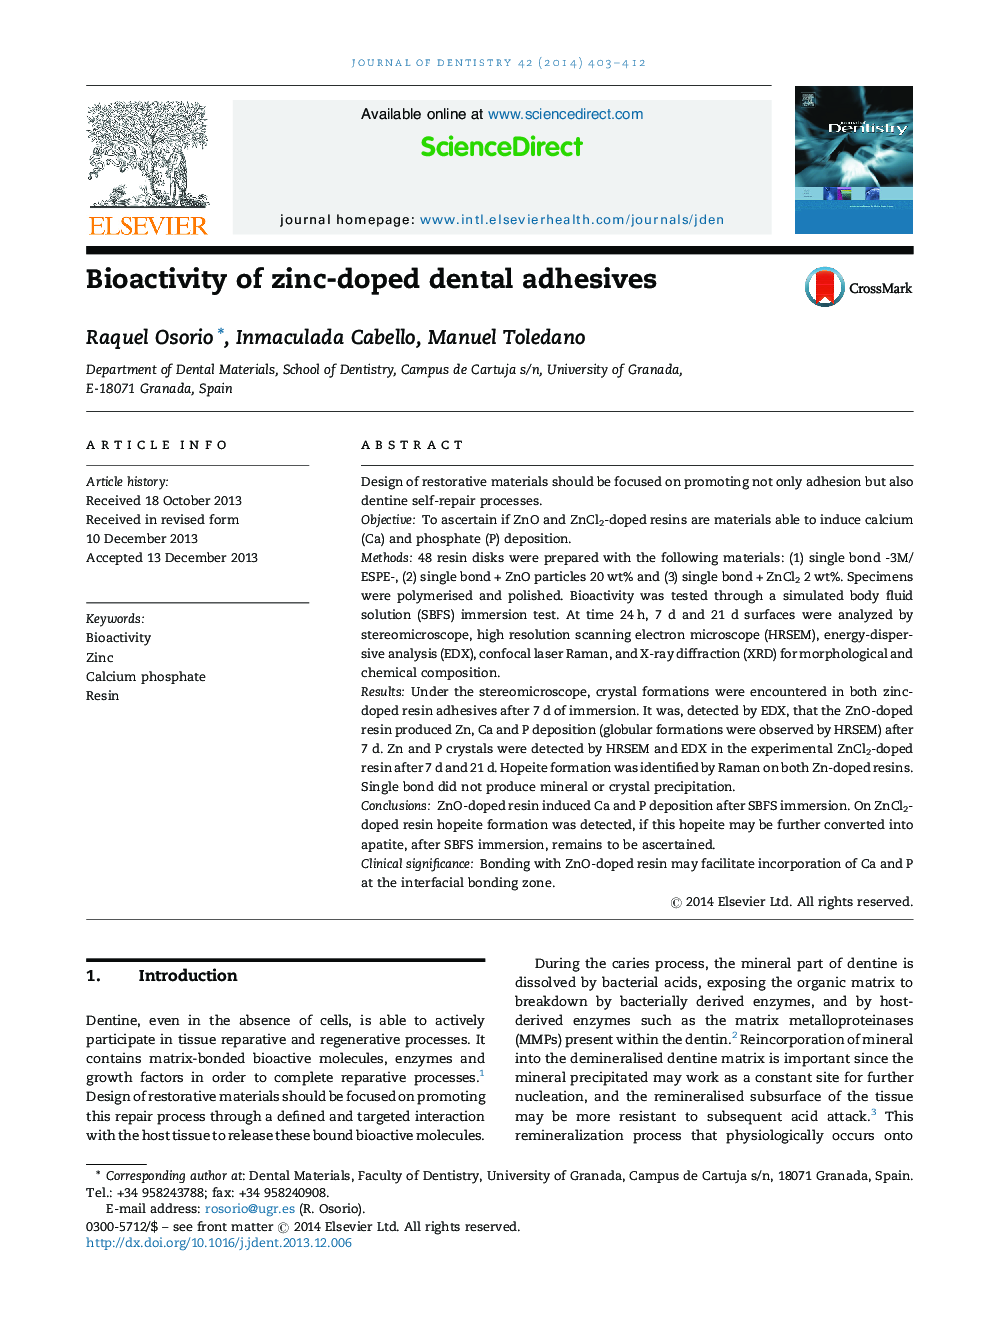 Bioactivity of zinc-doped dental adhesives